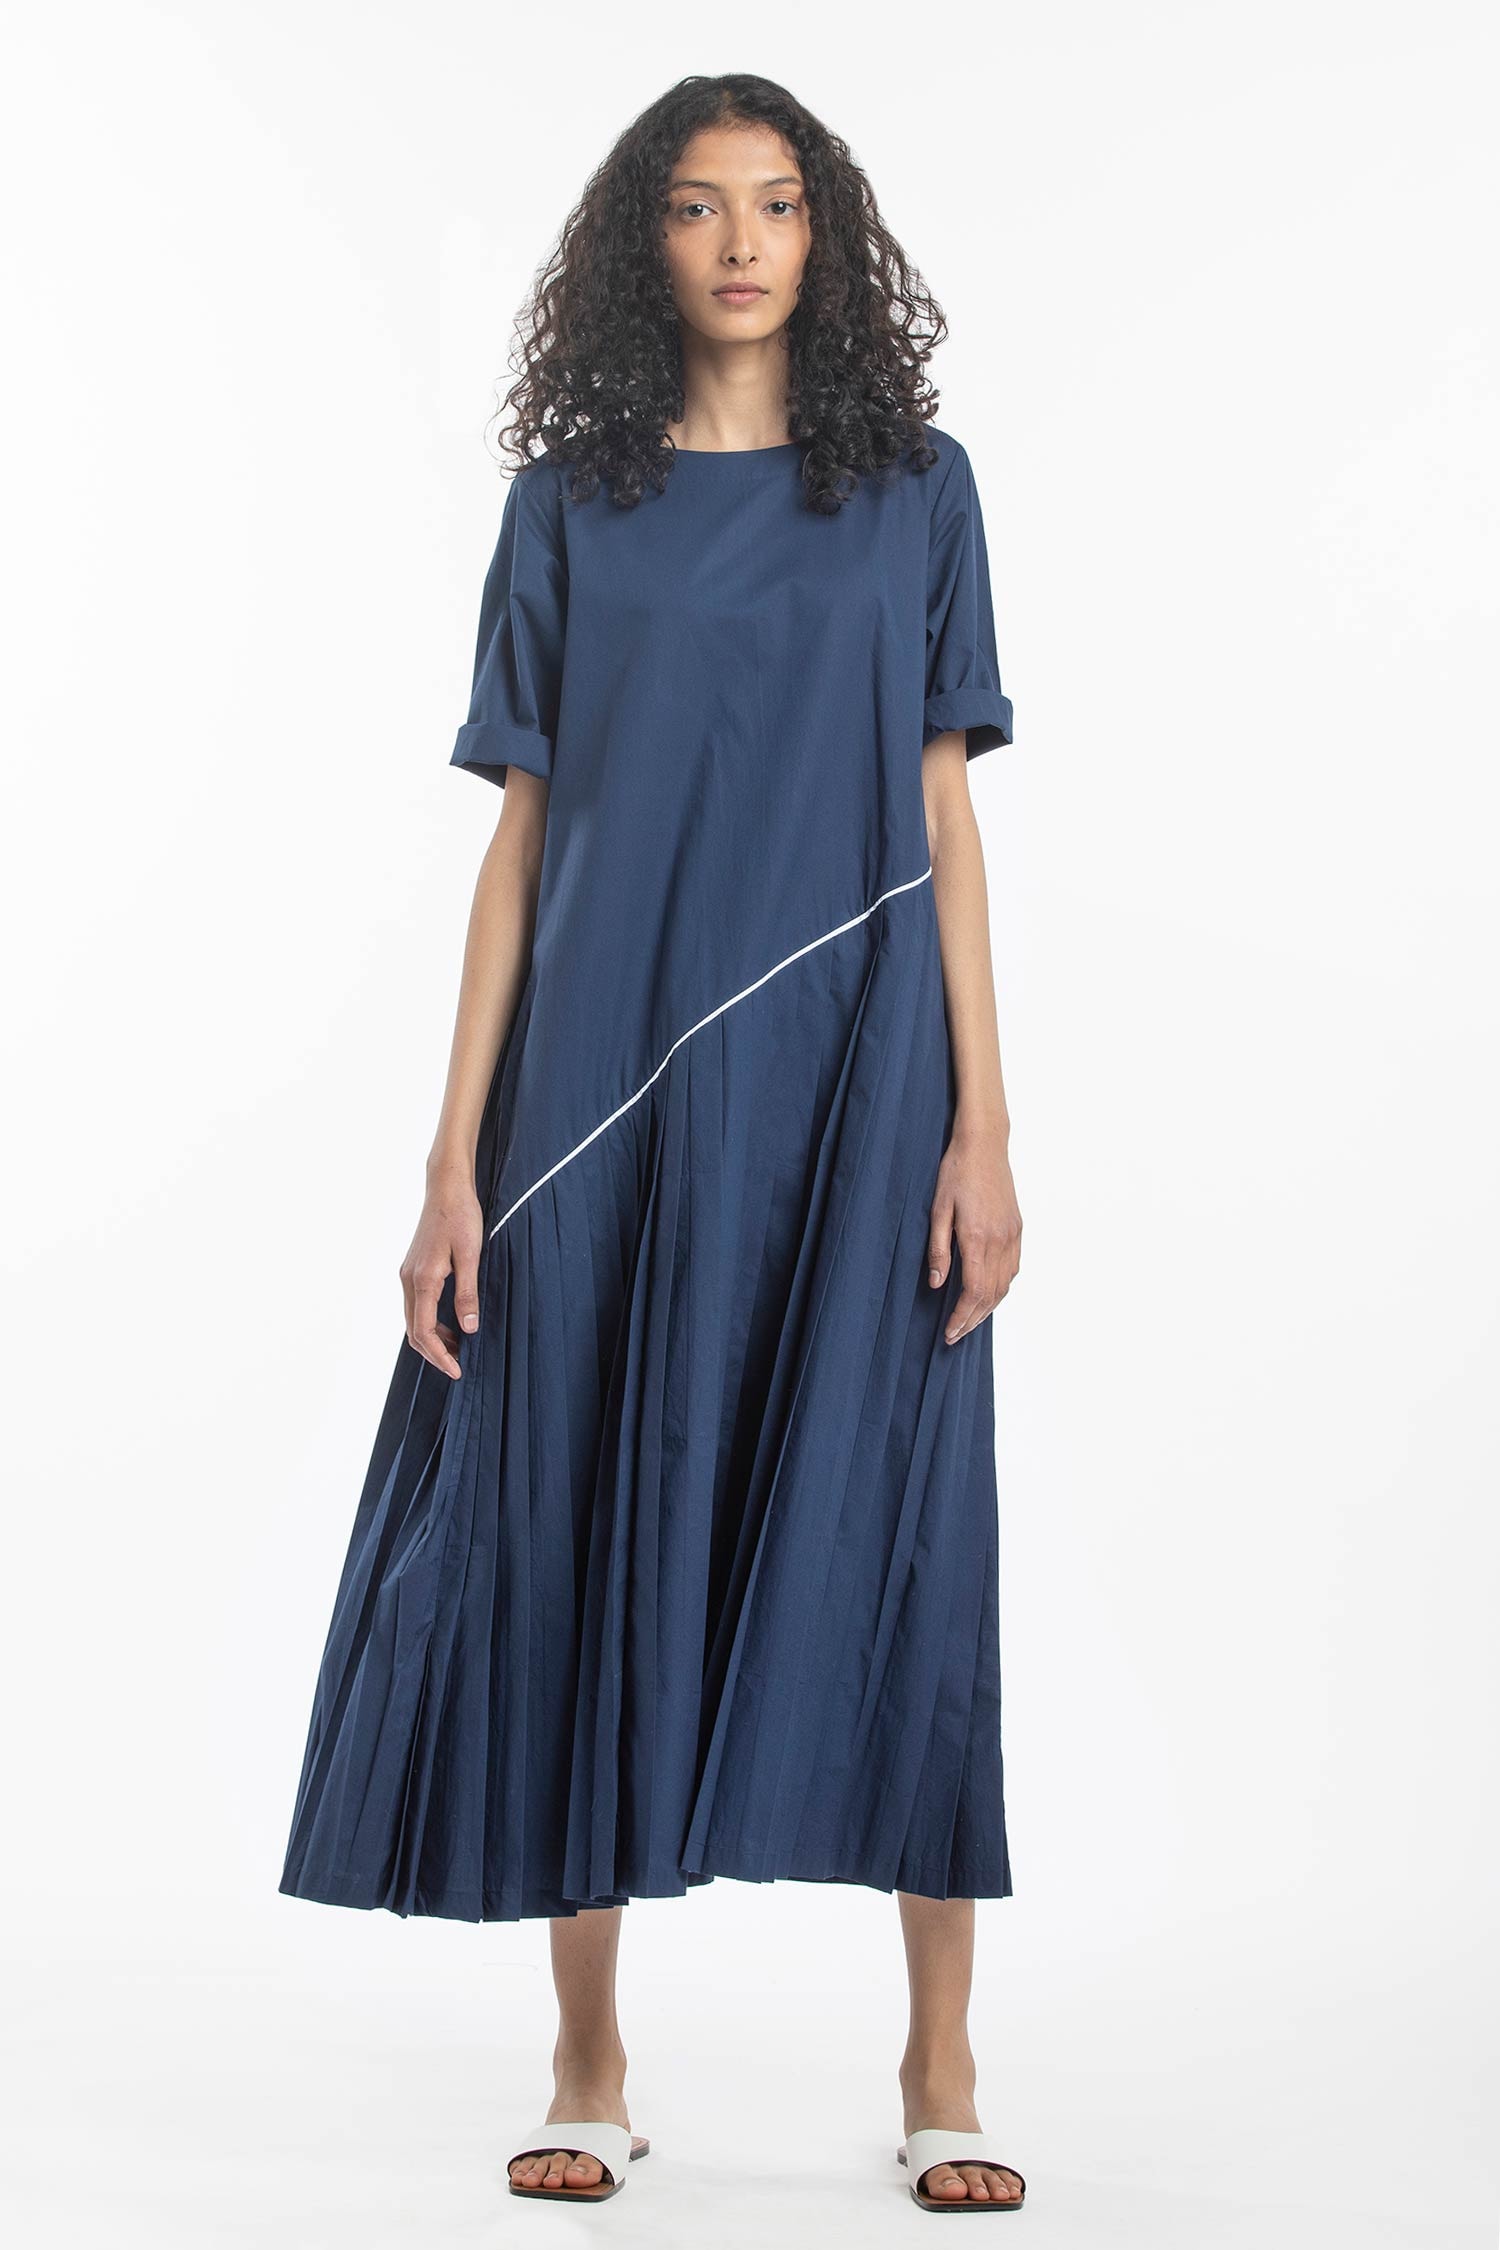 Buy Three Blue Pleated Cotton Dress Online | Aza Fashions